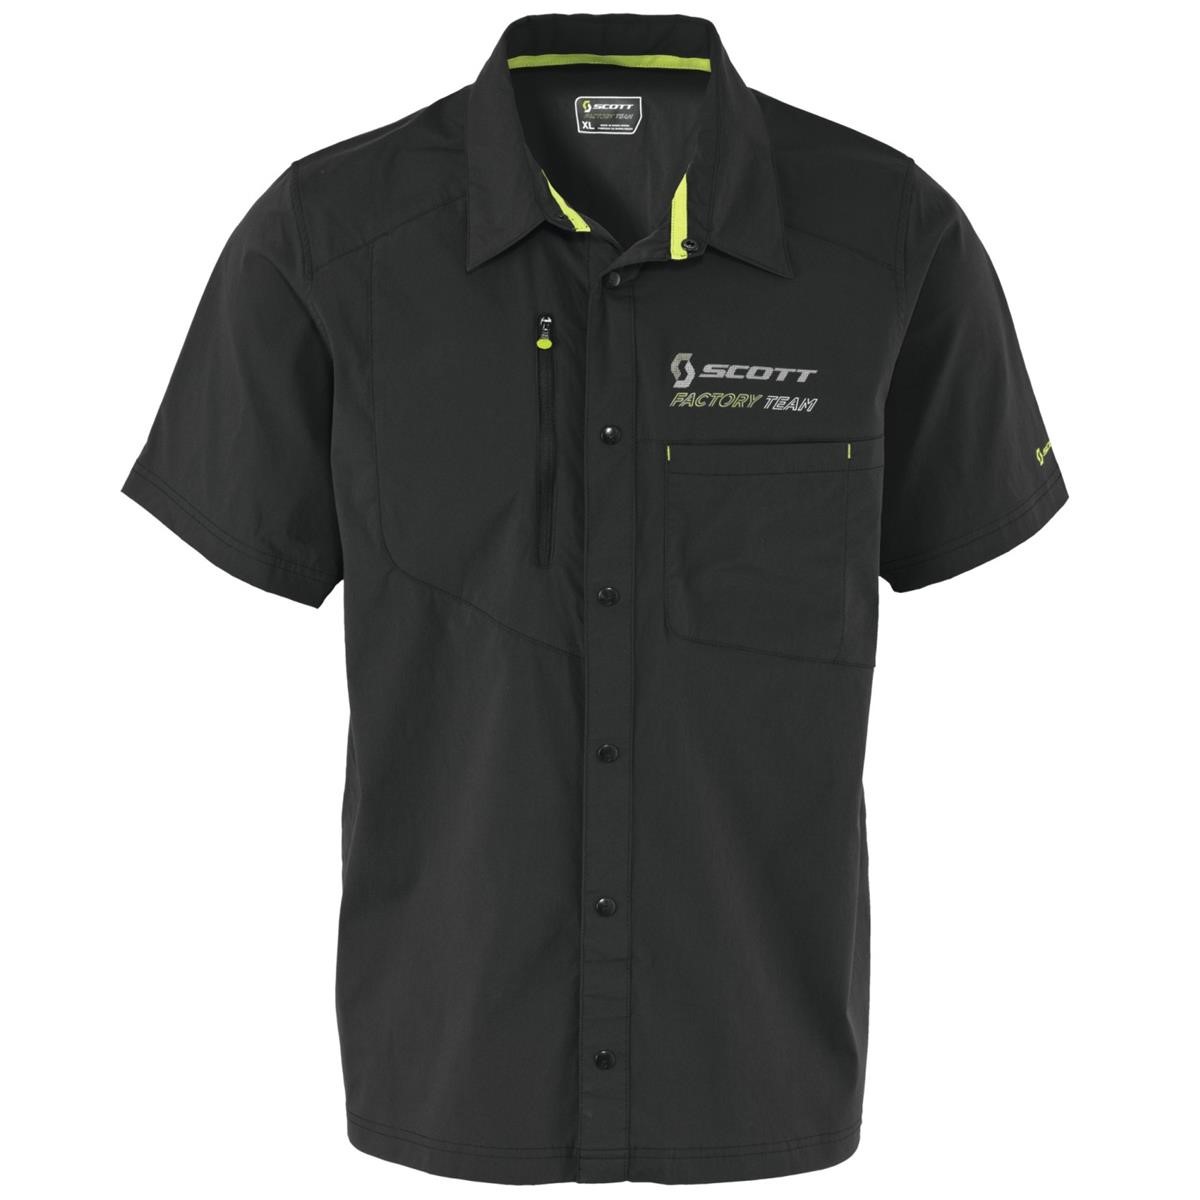 Scott Shirt Short Sleeve Factory Team Black/Lime Green